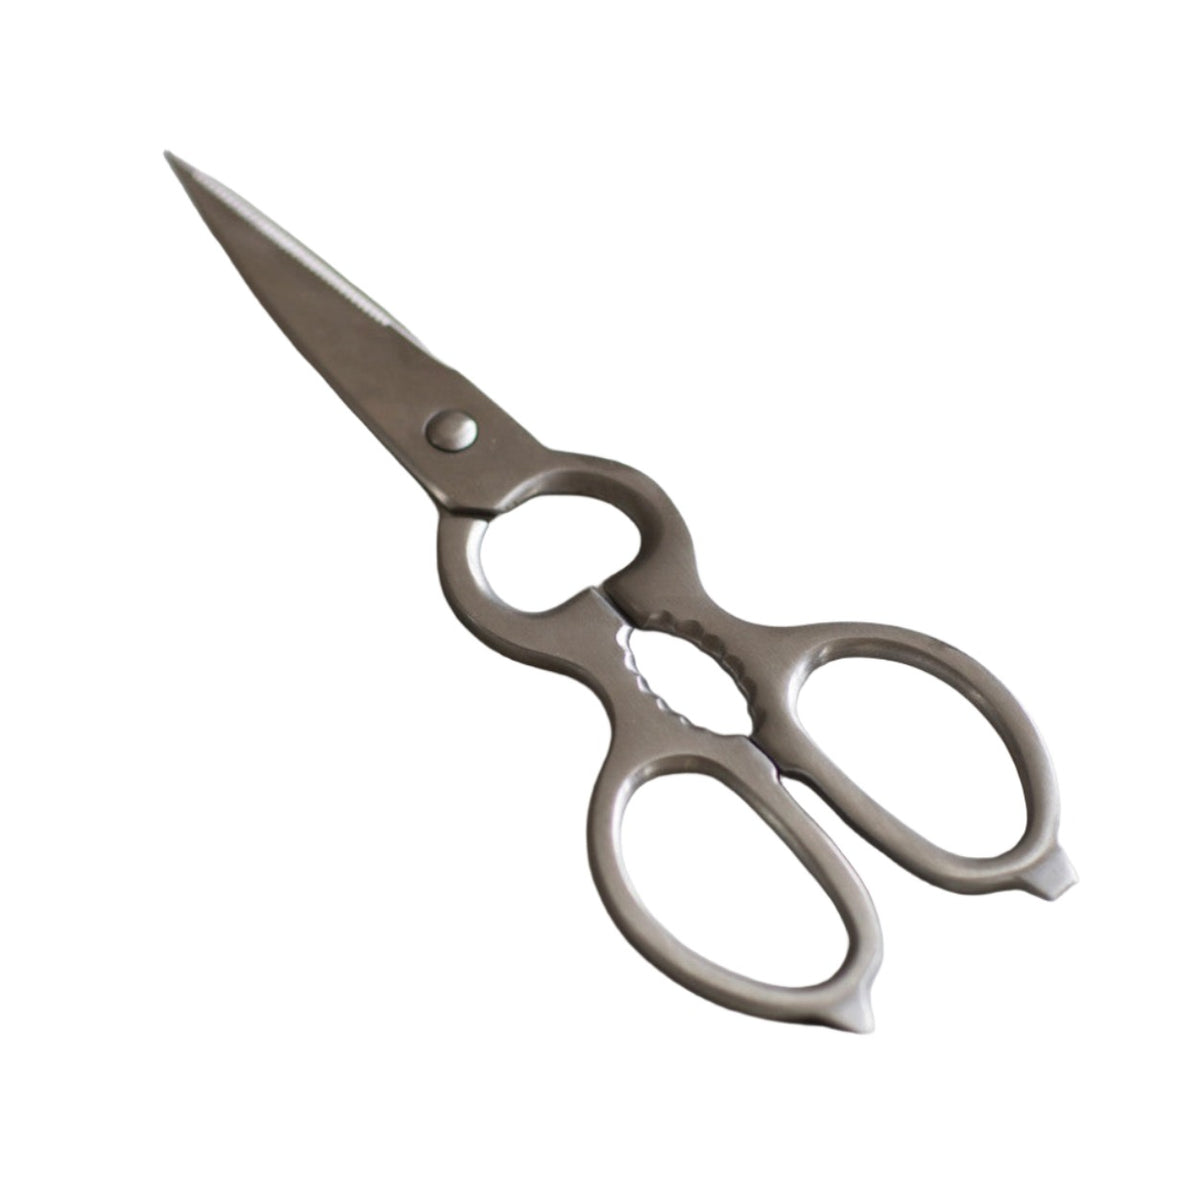 Kitchen Scissors - Stainless Steel